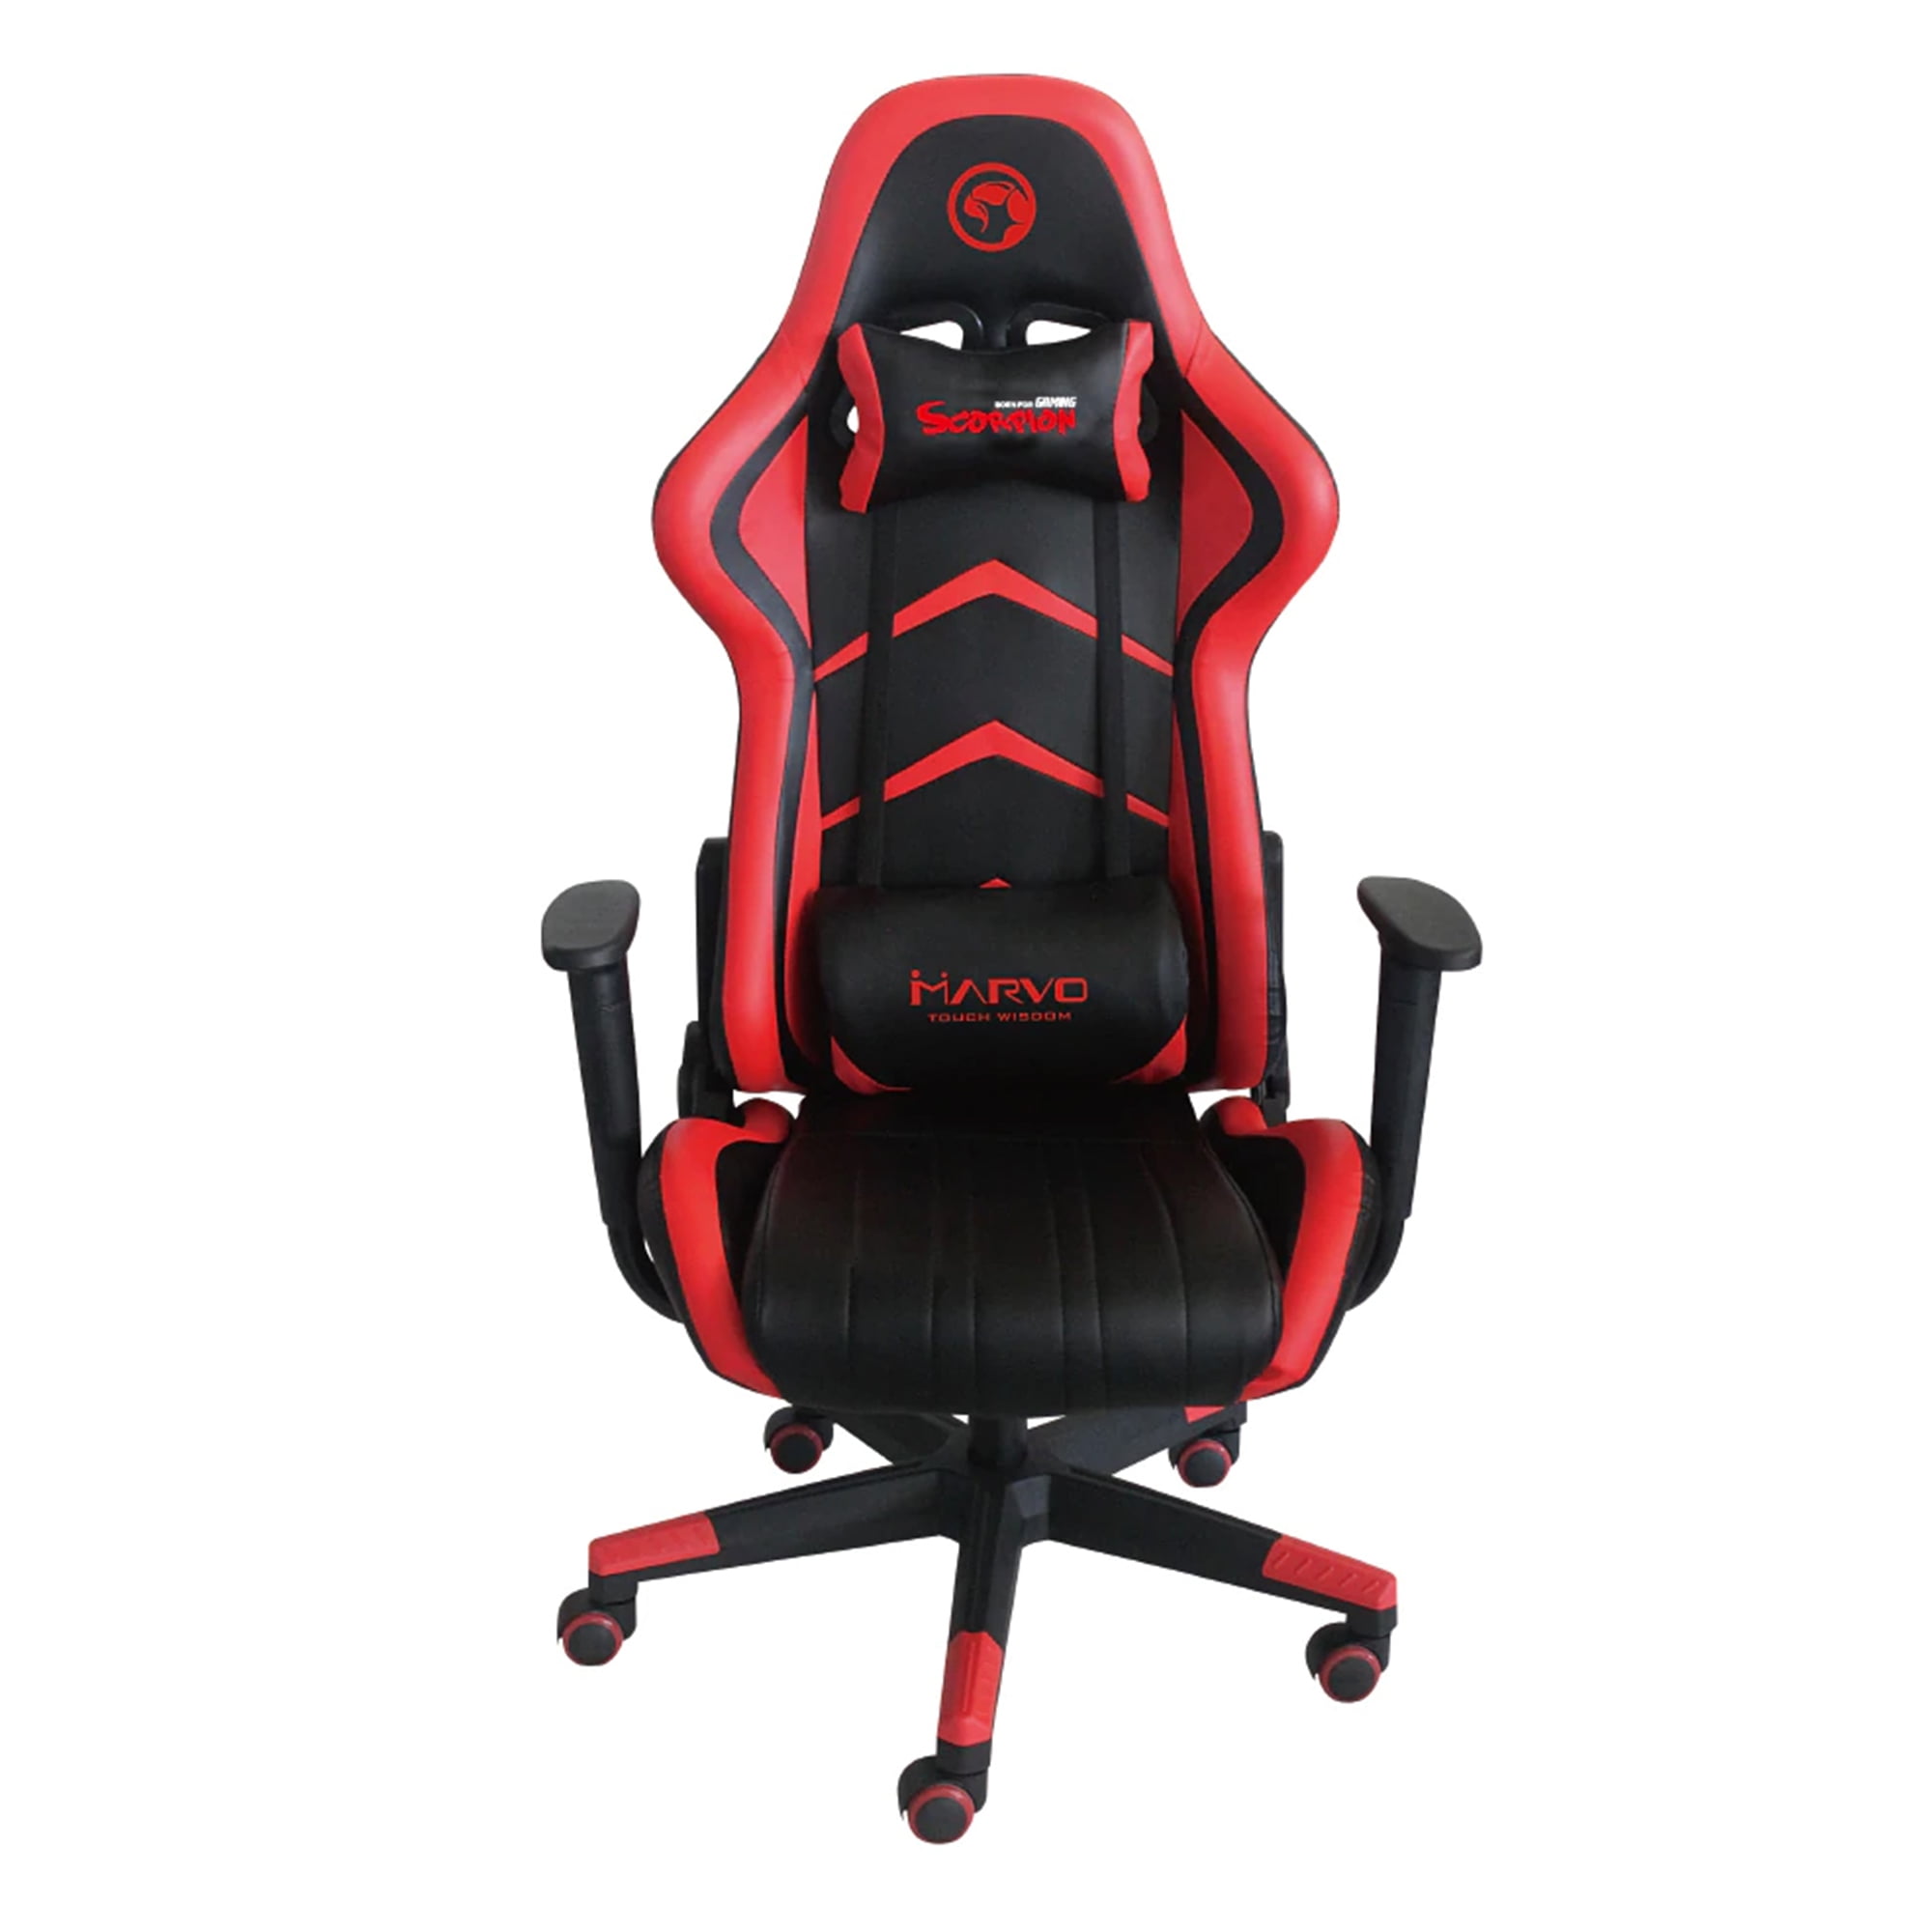  Marvo  Scorpion  CH 106 Adjustable Gaming  Chair  Black Red 